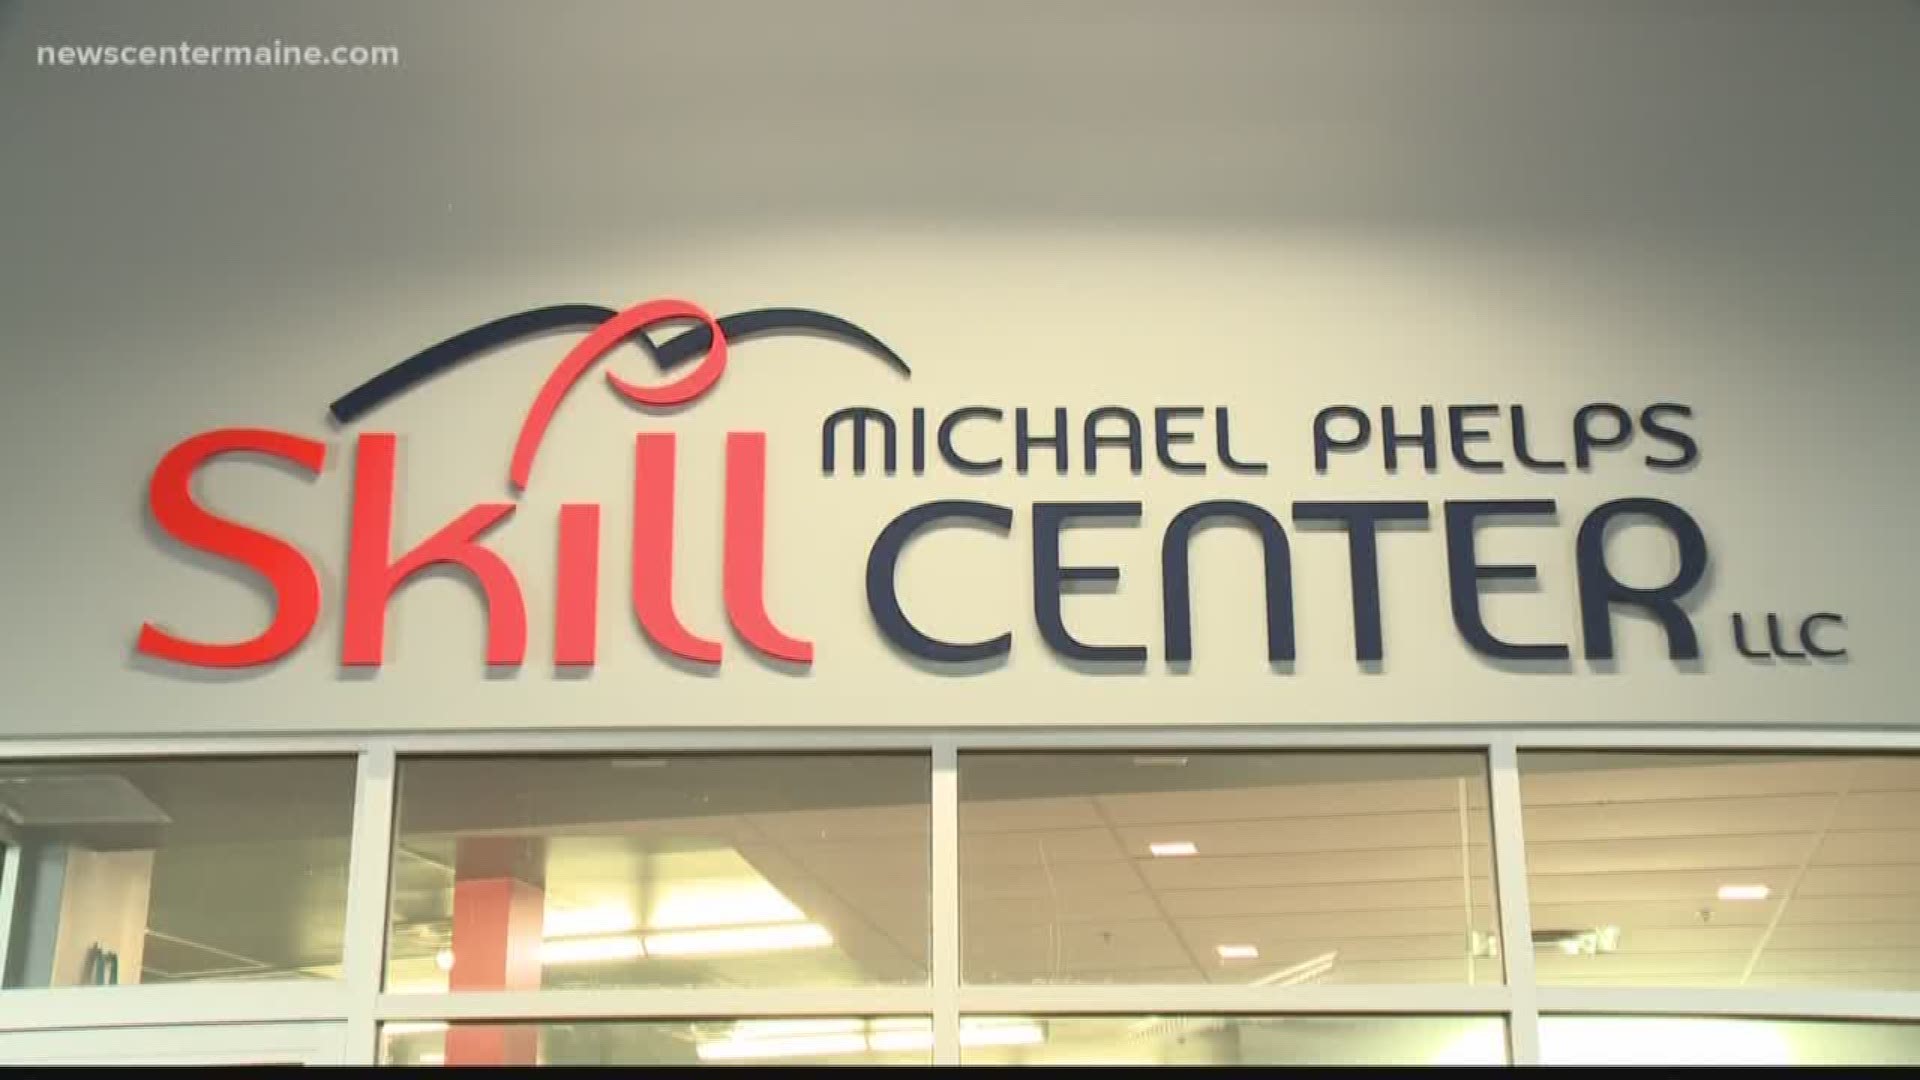 NOW: Phelps Skill Center to close